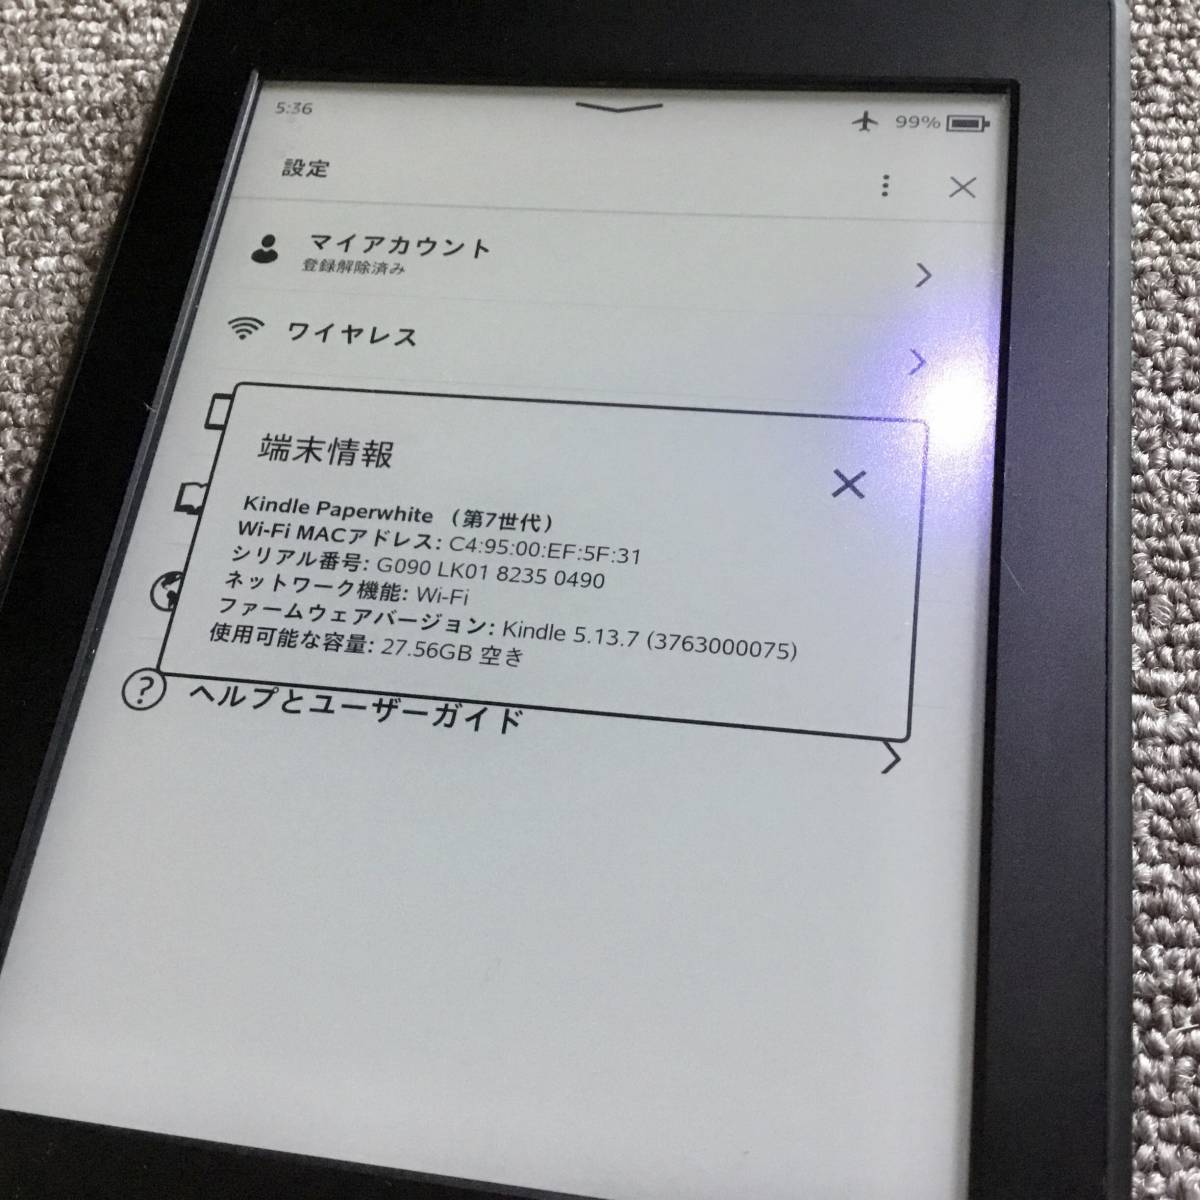 Kindle Paperwhite 7 generation 32GB manga model advertisement have 